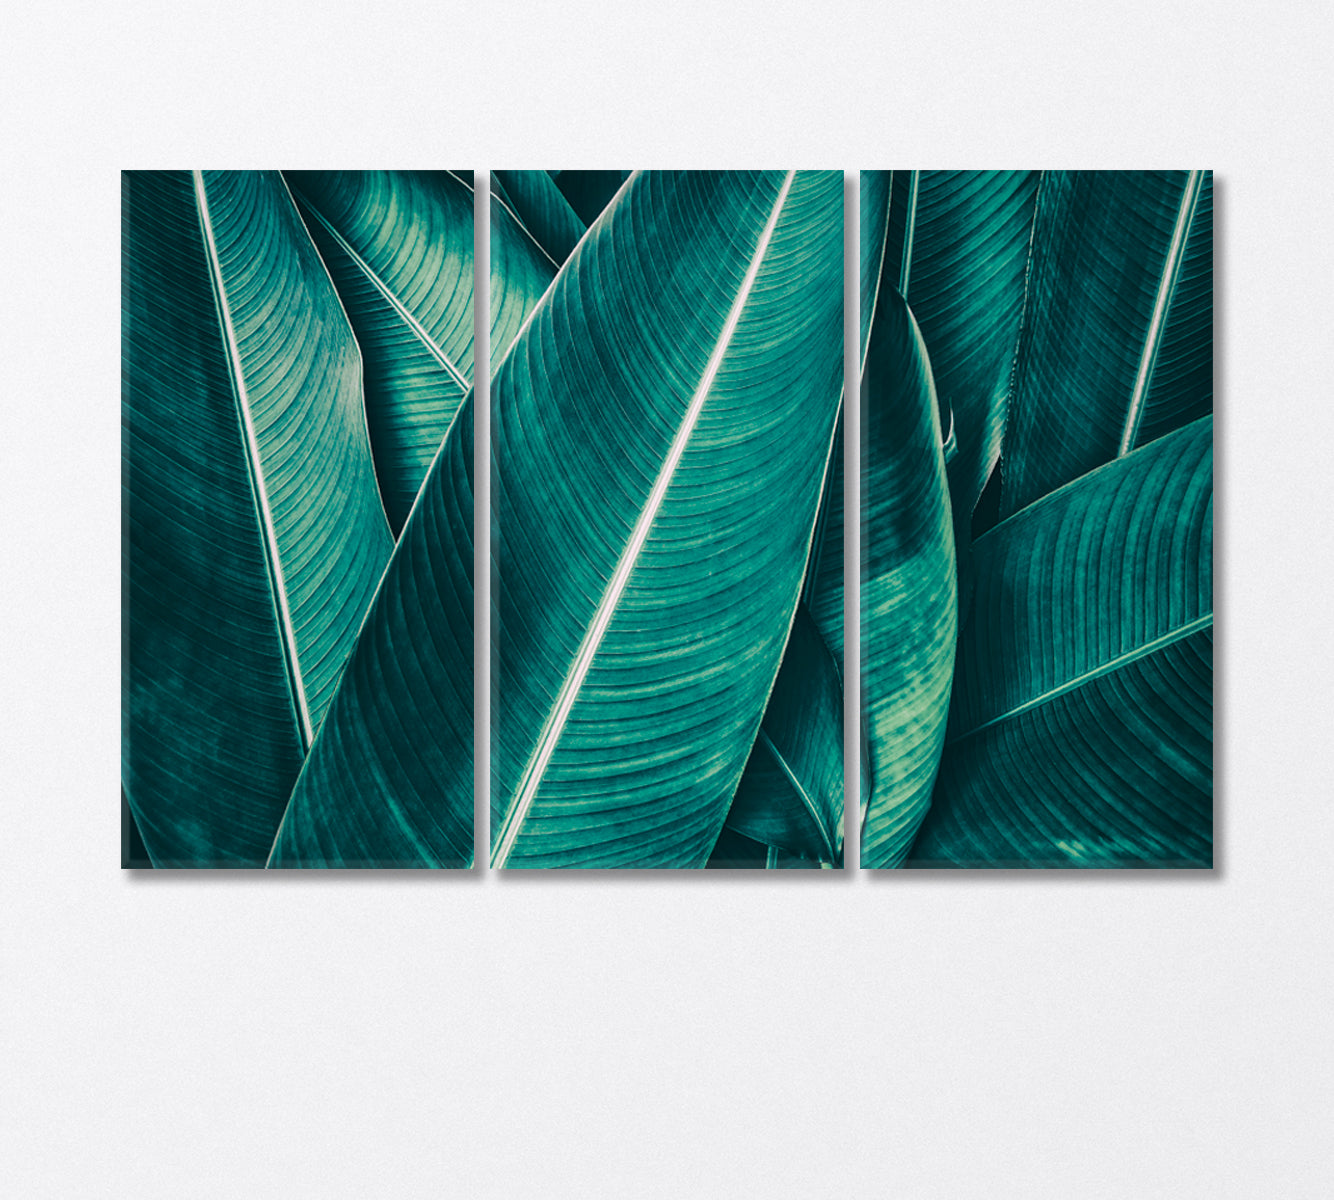 Large Tropical Leaves Canvas Print-Canvas Print-CetArt-3 Panels-36x24 inches-CetArt